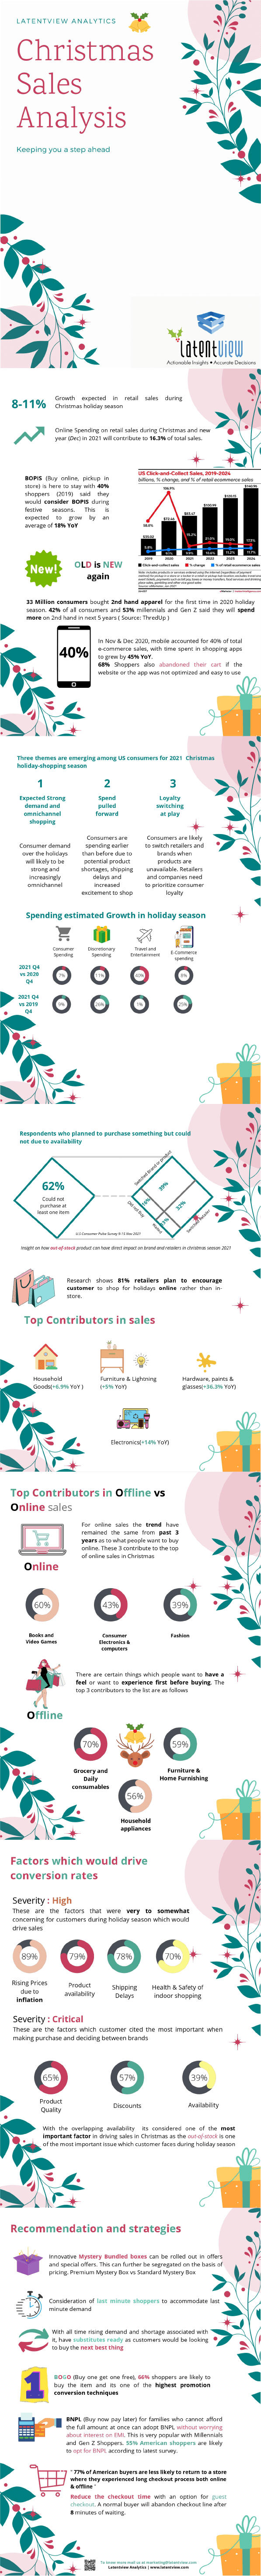 Christmas sales analysis report infographic